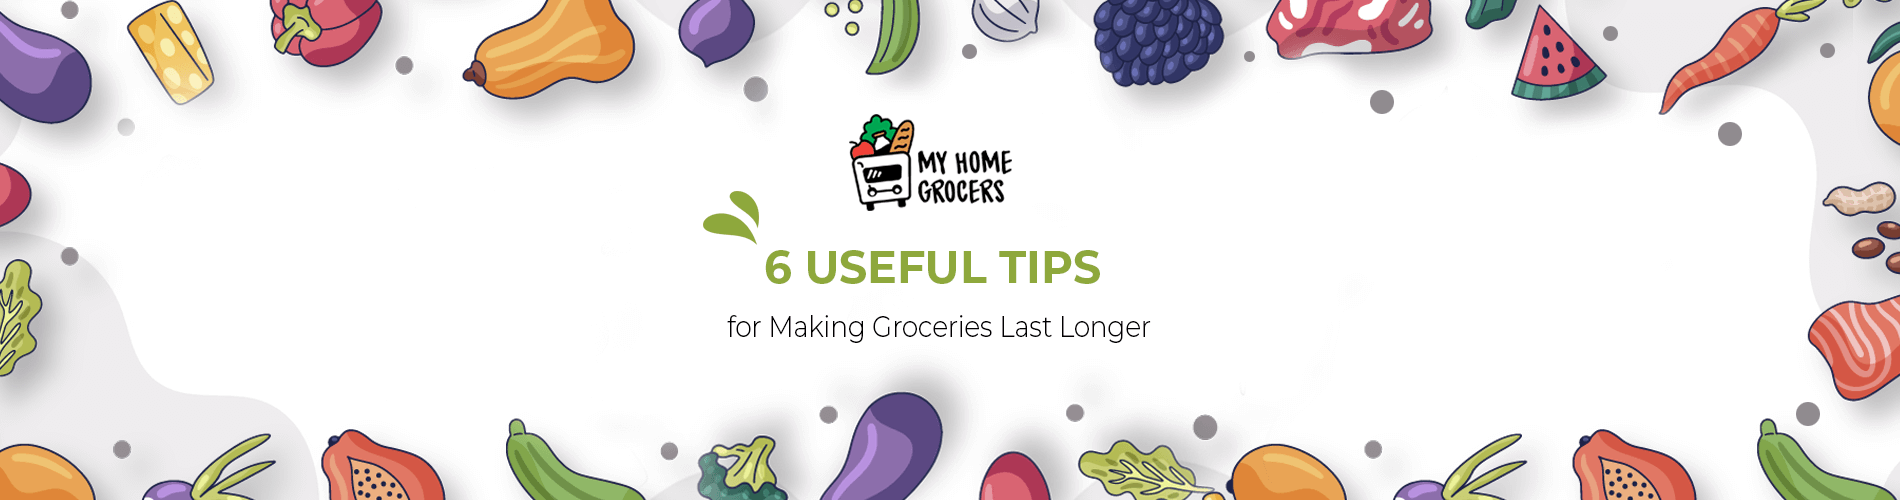 6 Useful Tips for Making Groceries Last Longer